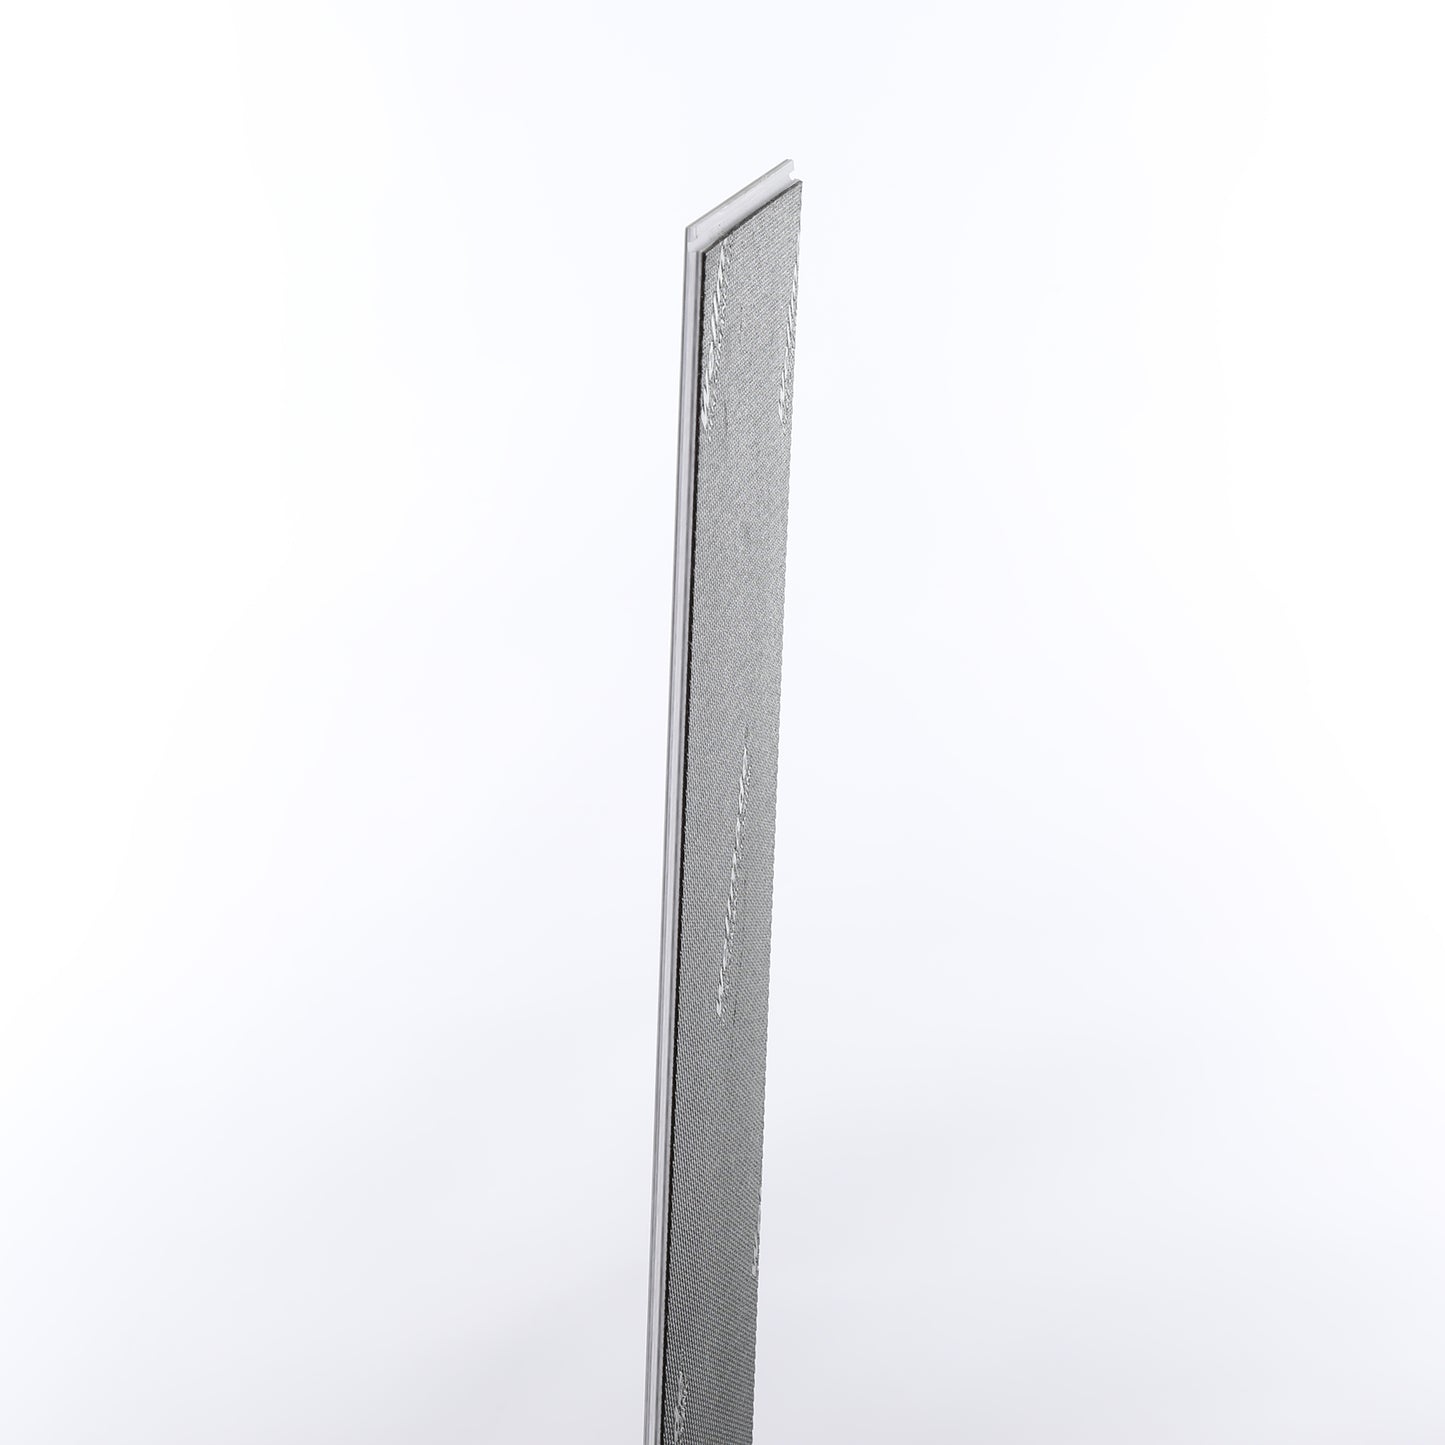 5mm Tundra HDPC® Waterproof Luxury Vinyl Plank Flooring 7.20 in. Wide x 60 in. Long